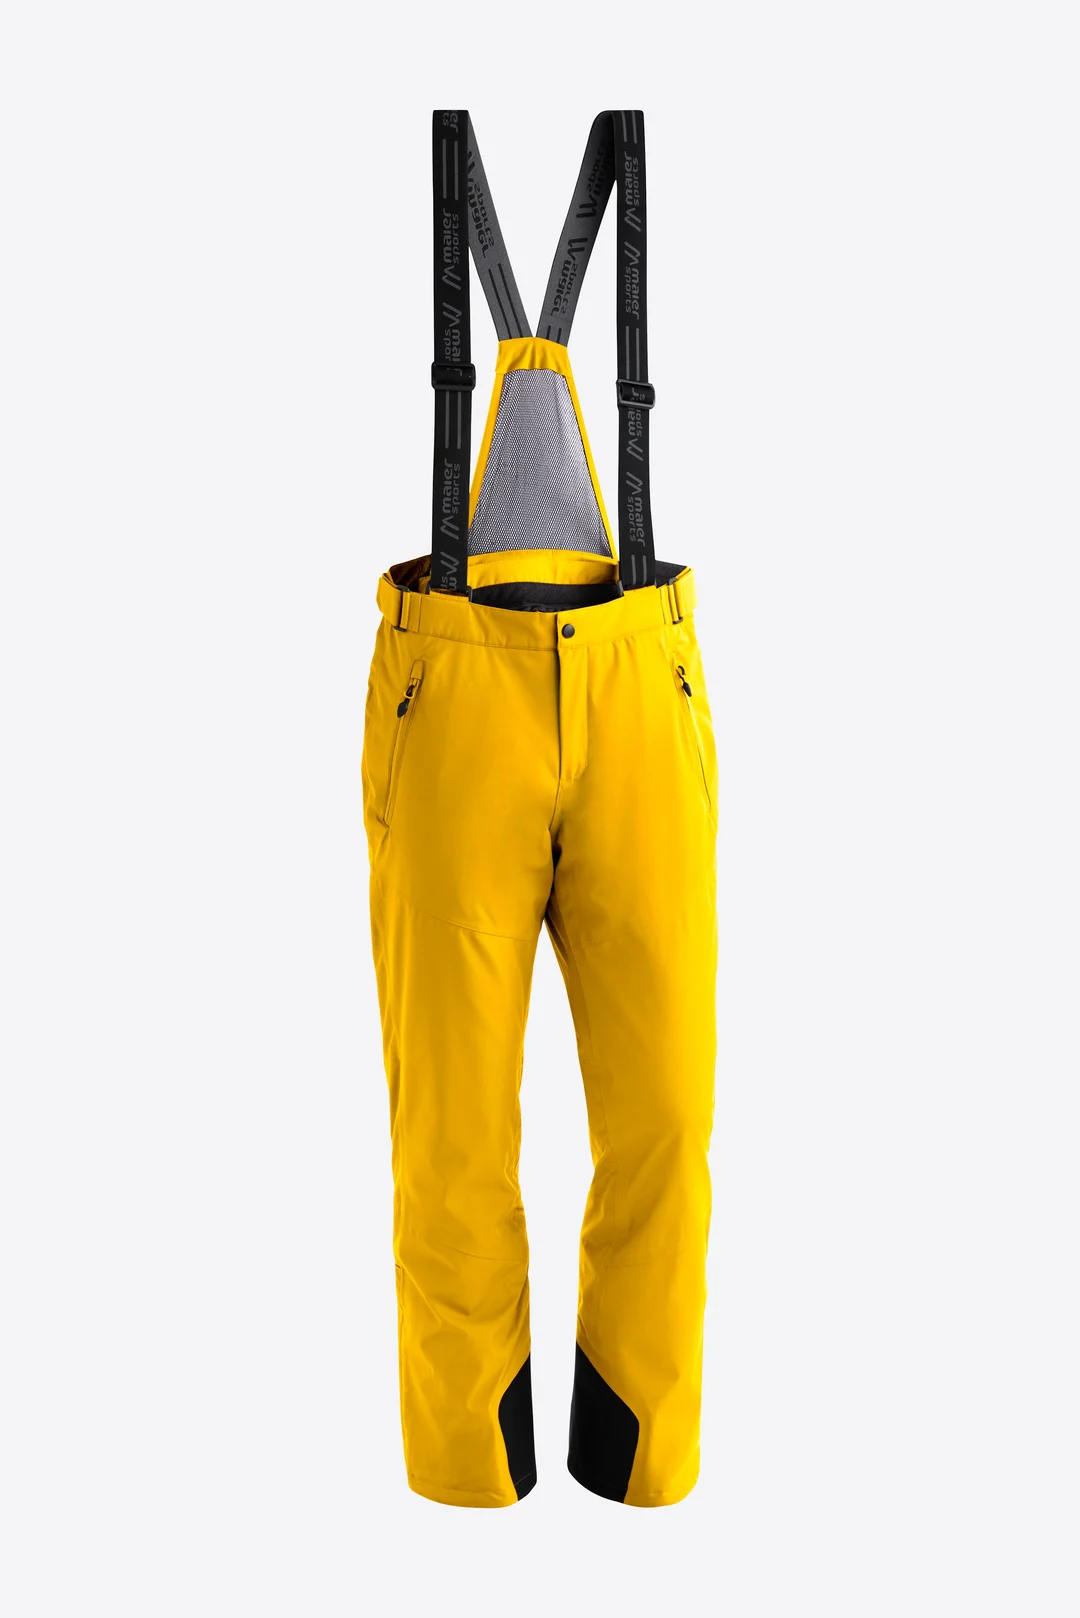 Maier Mens Anton 2 Ski Trousers Yellow